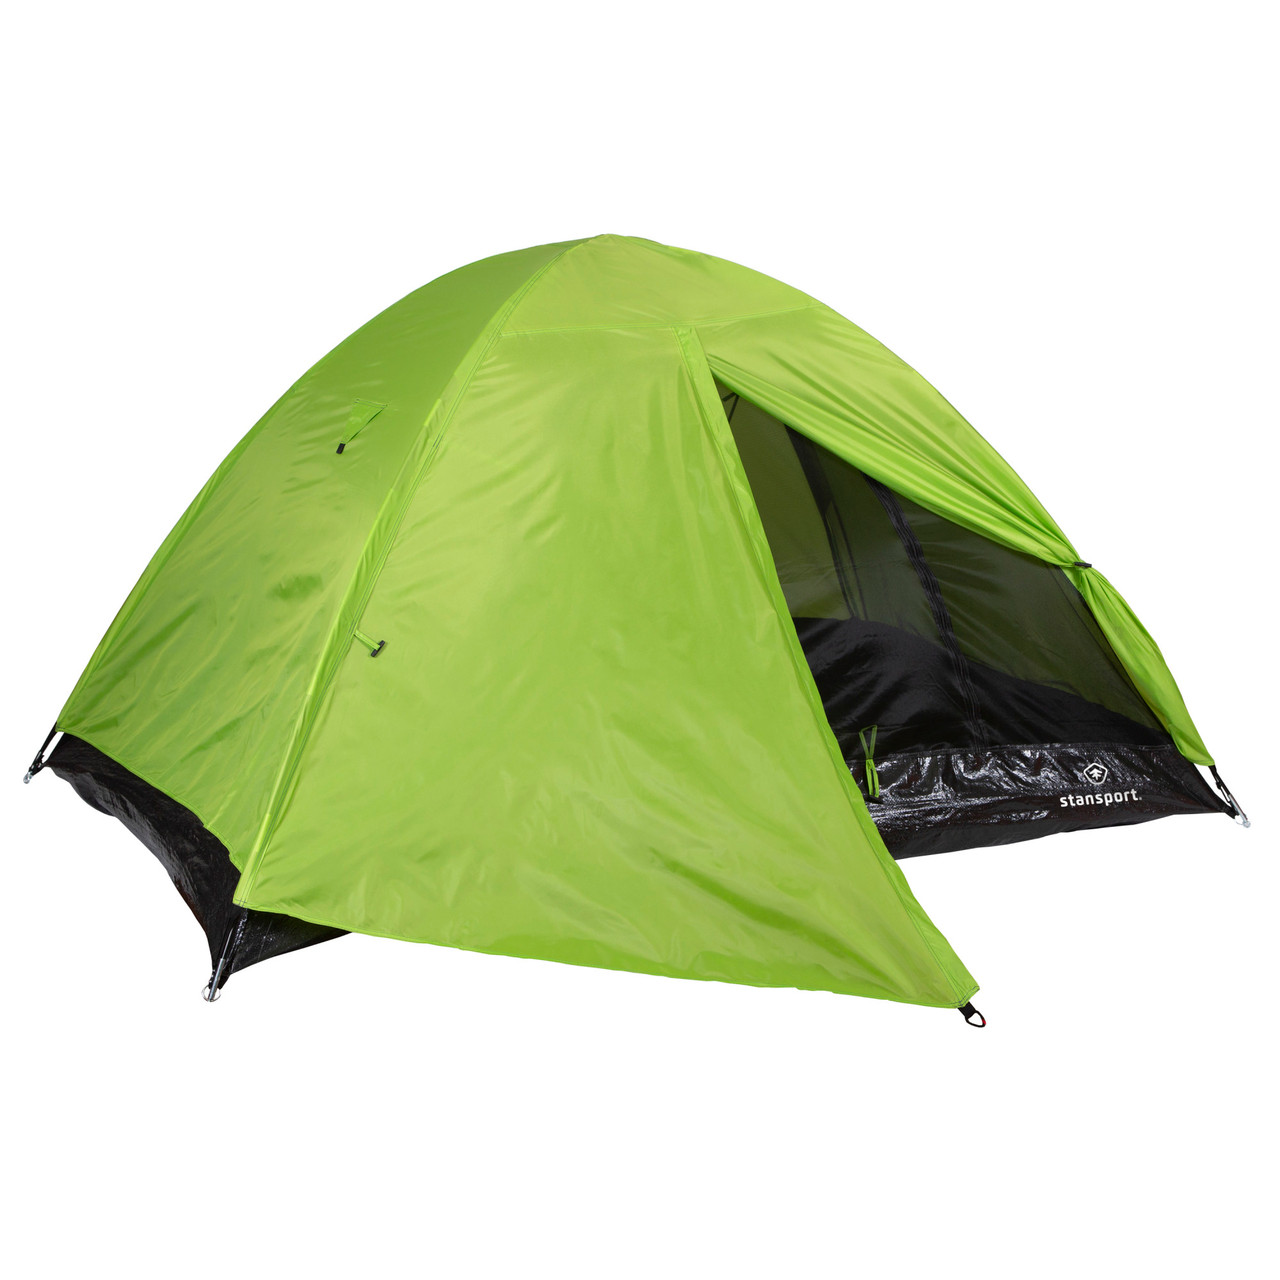 Starlite I Mesh Backpack Tent with Full Rain Fly - Stansport